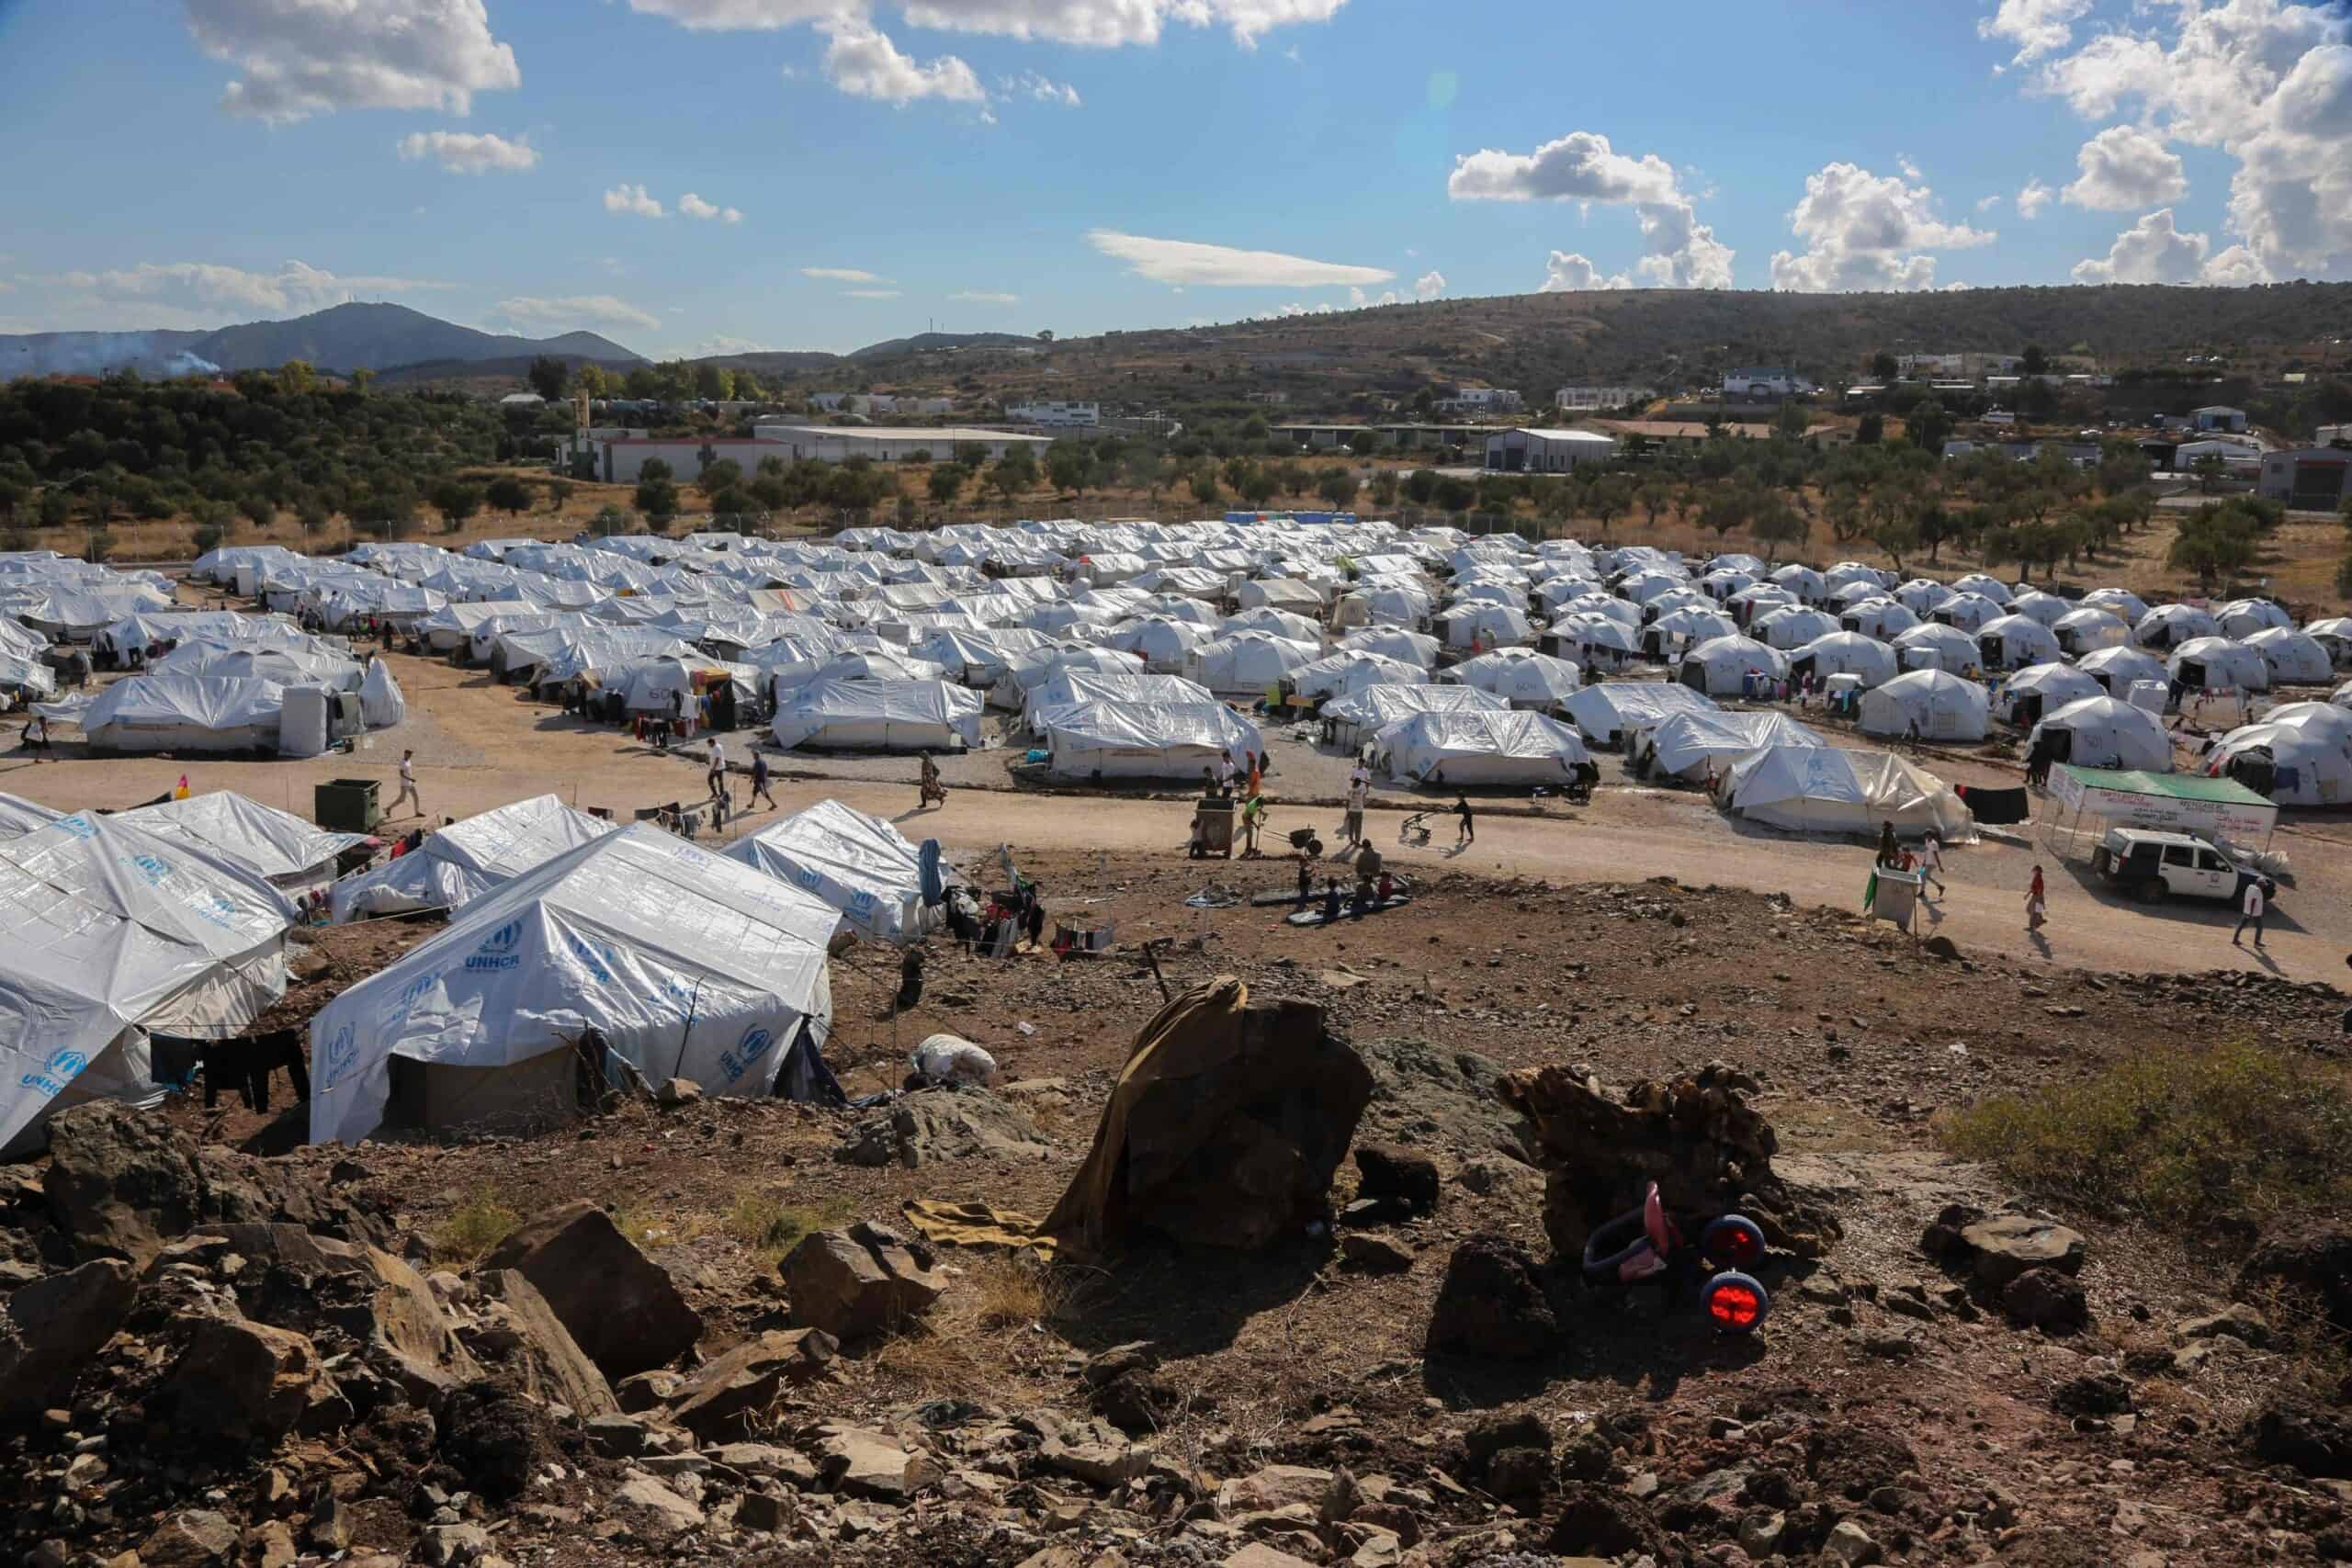 Kara Tepe migrant camp